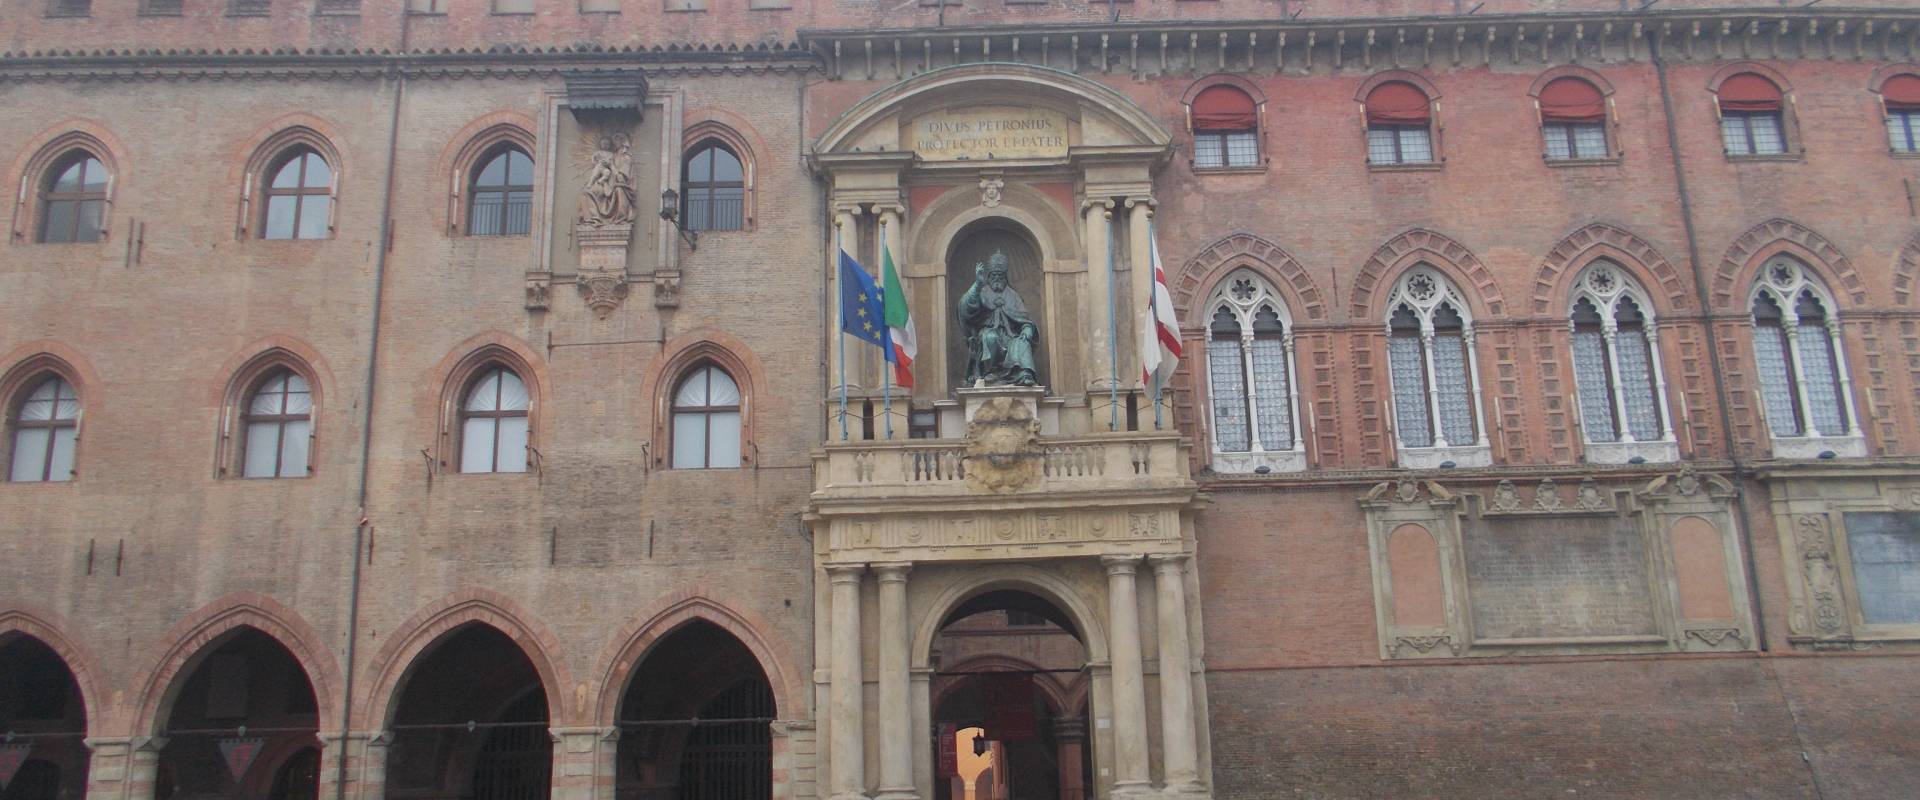 Palazzo d'Accursio1 photo by BelPatty86